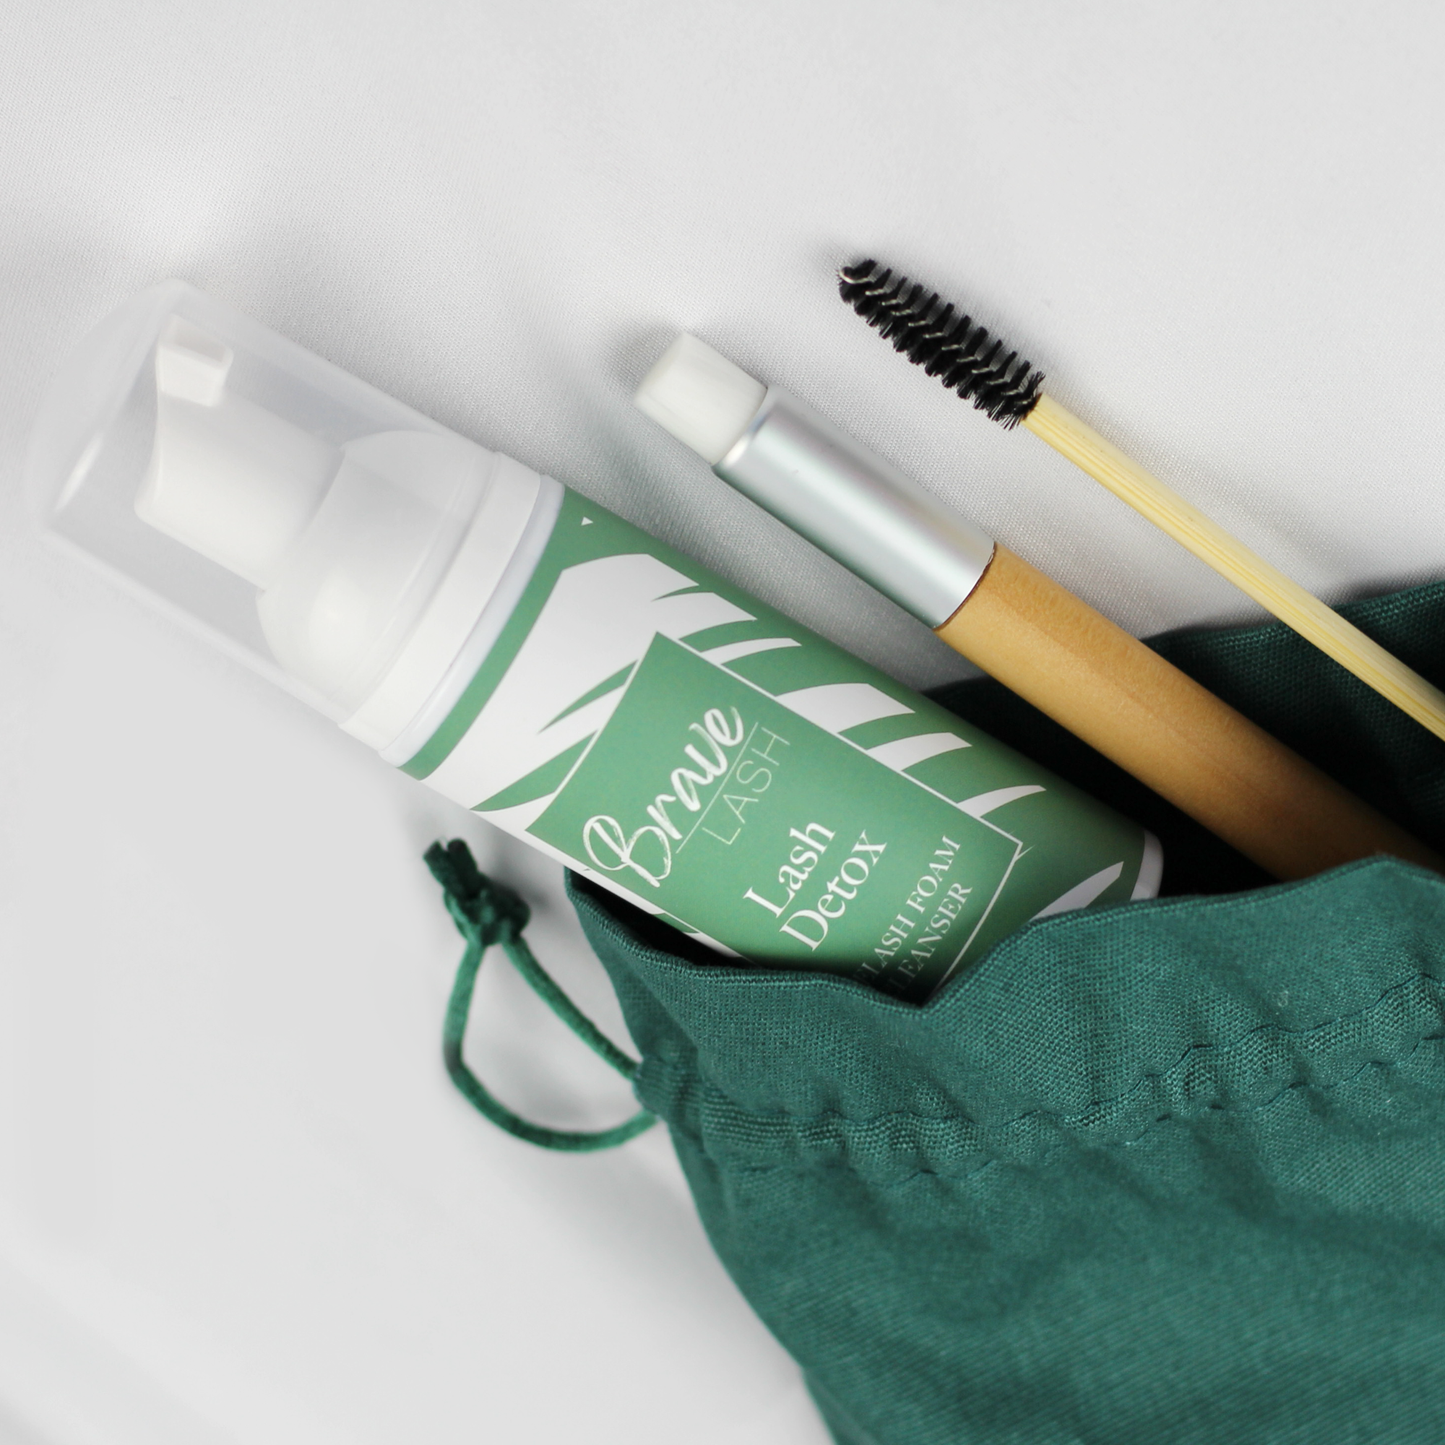 Lash detox kit fetauring bamboo mascara wand, lash brush and lash shampoo